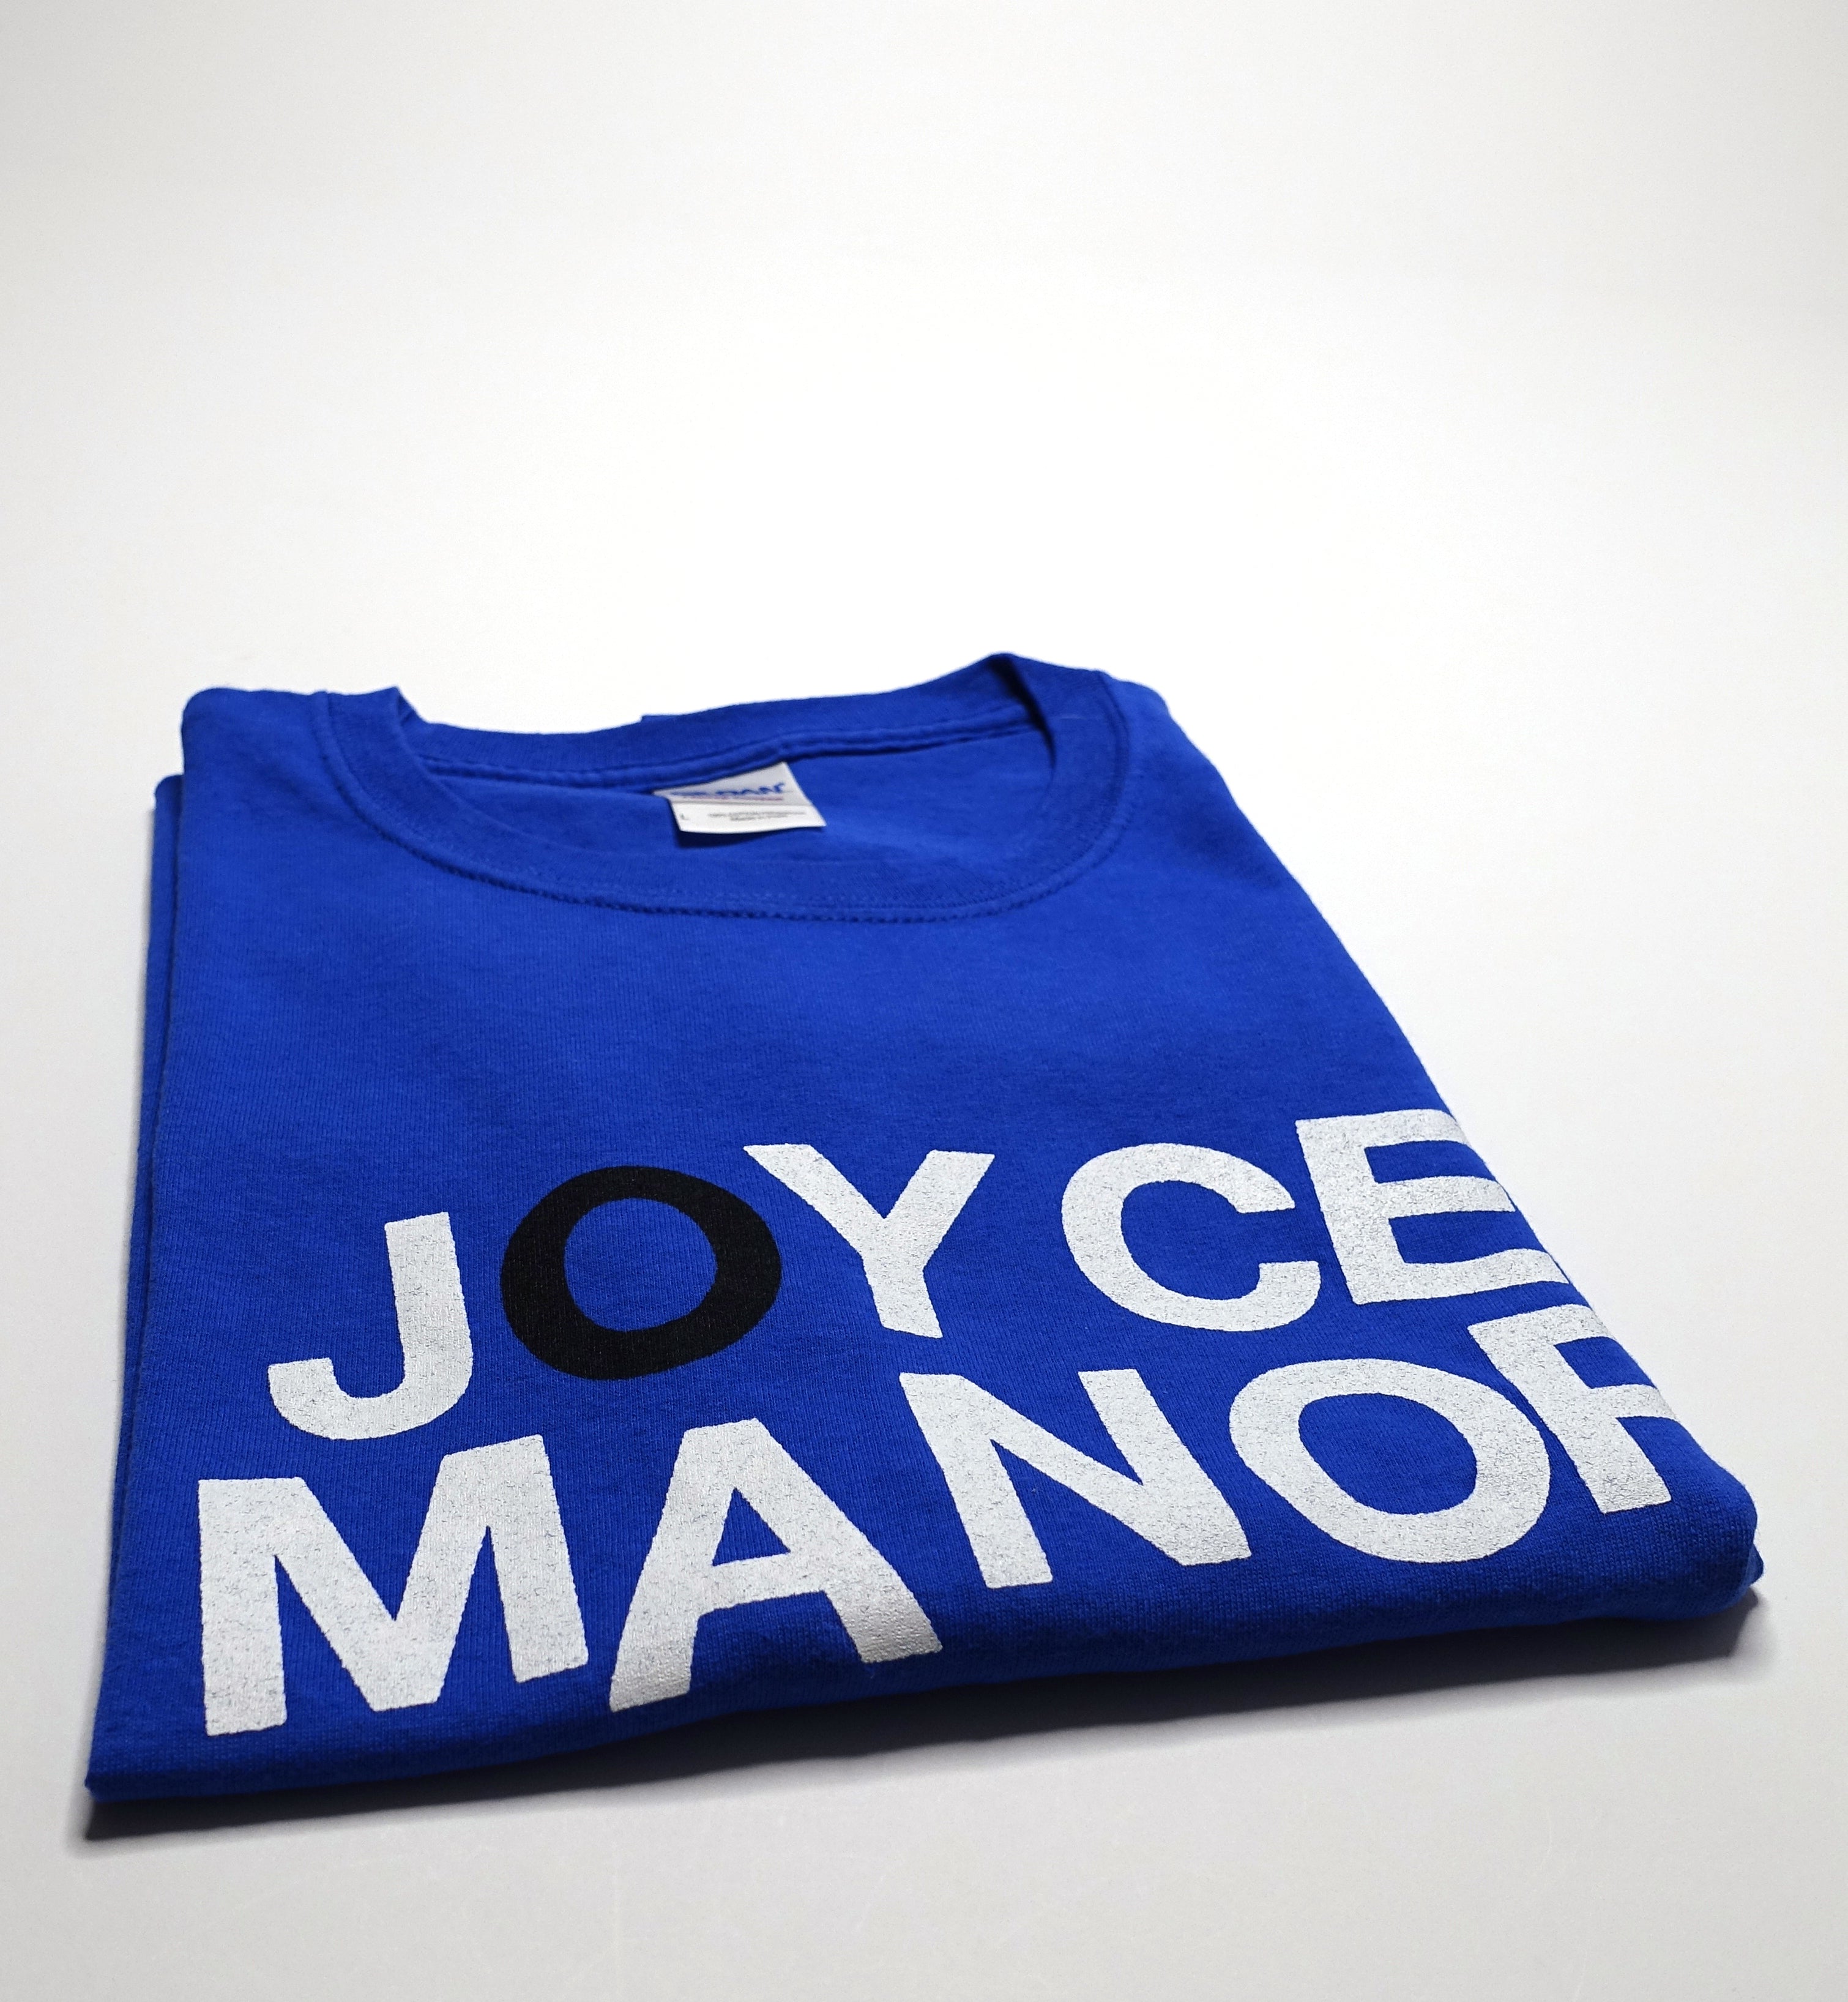 Joyce Manor – O Logo Tour Shirt Size Large